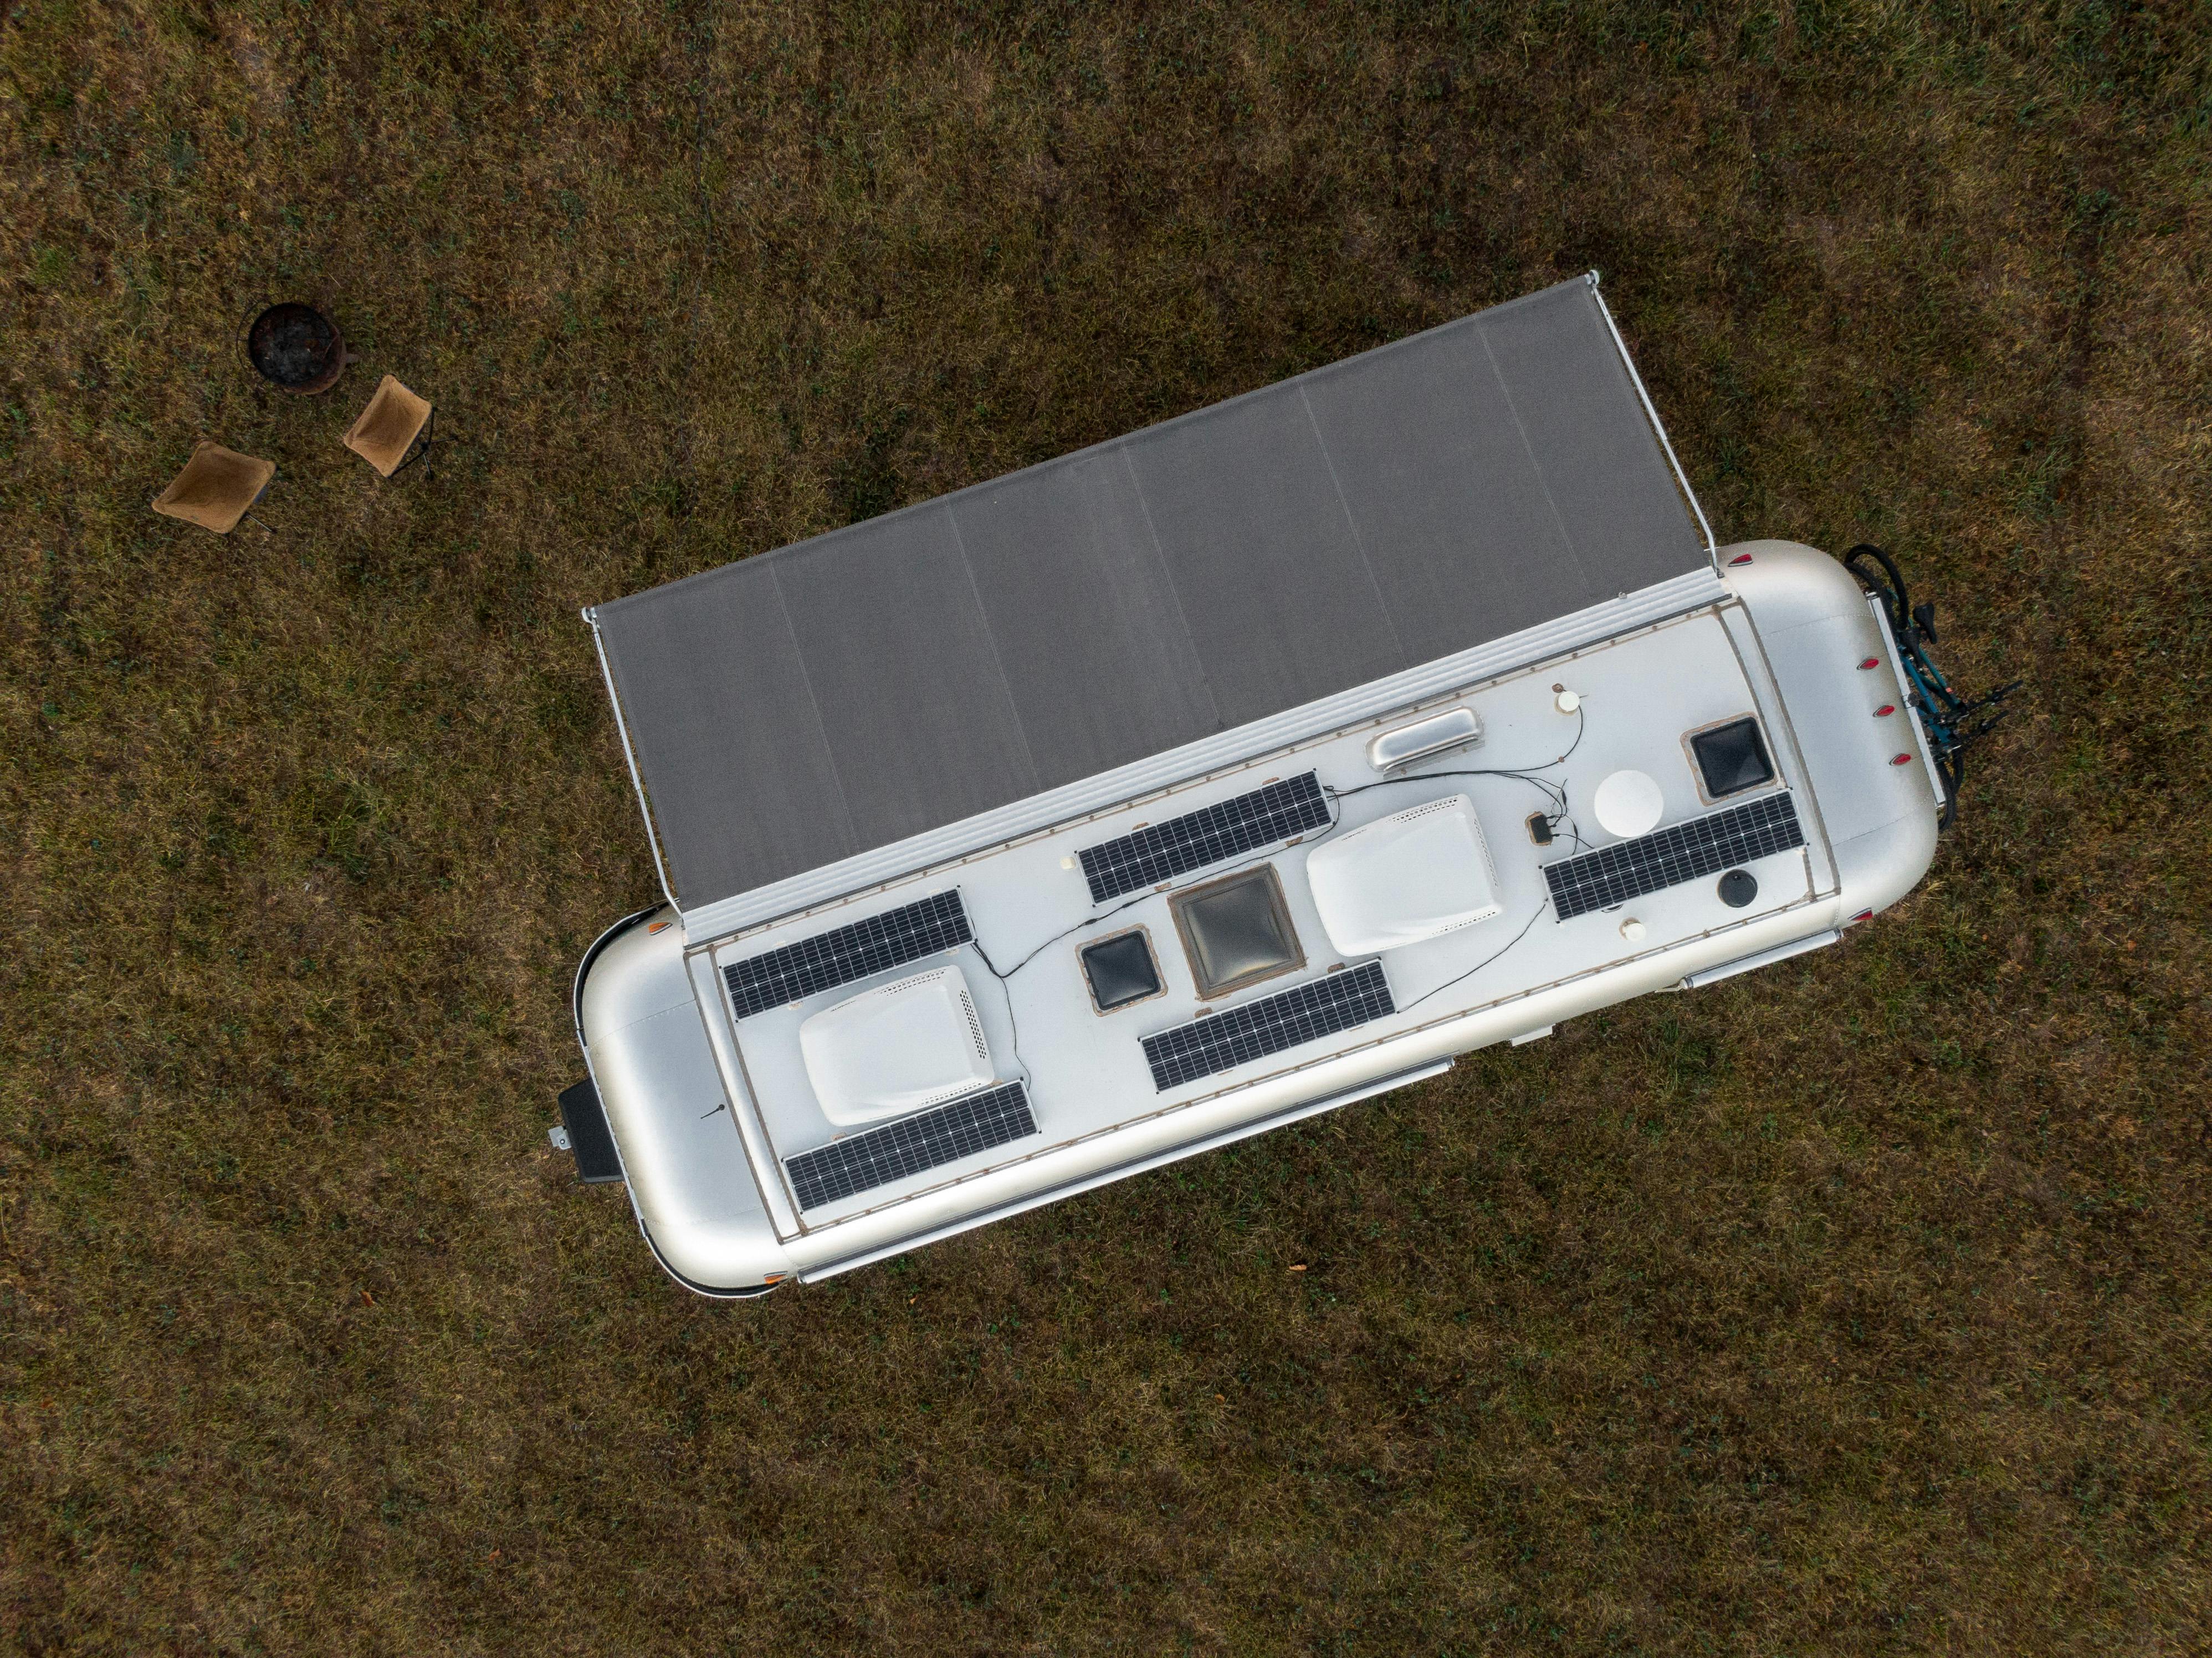 Solar panels on top of Karen Blue's Airstream